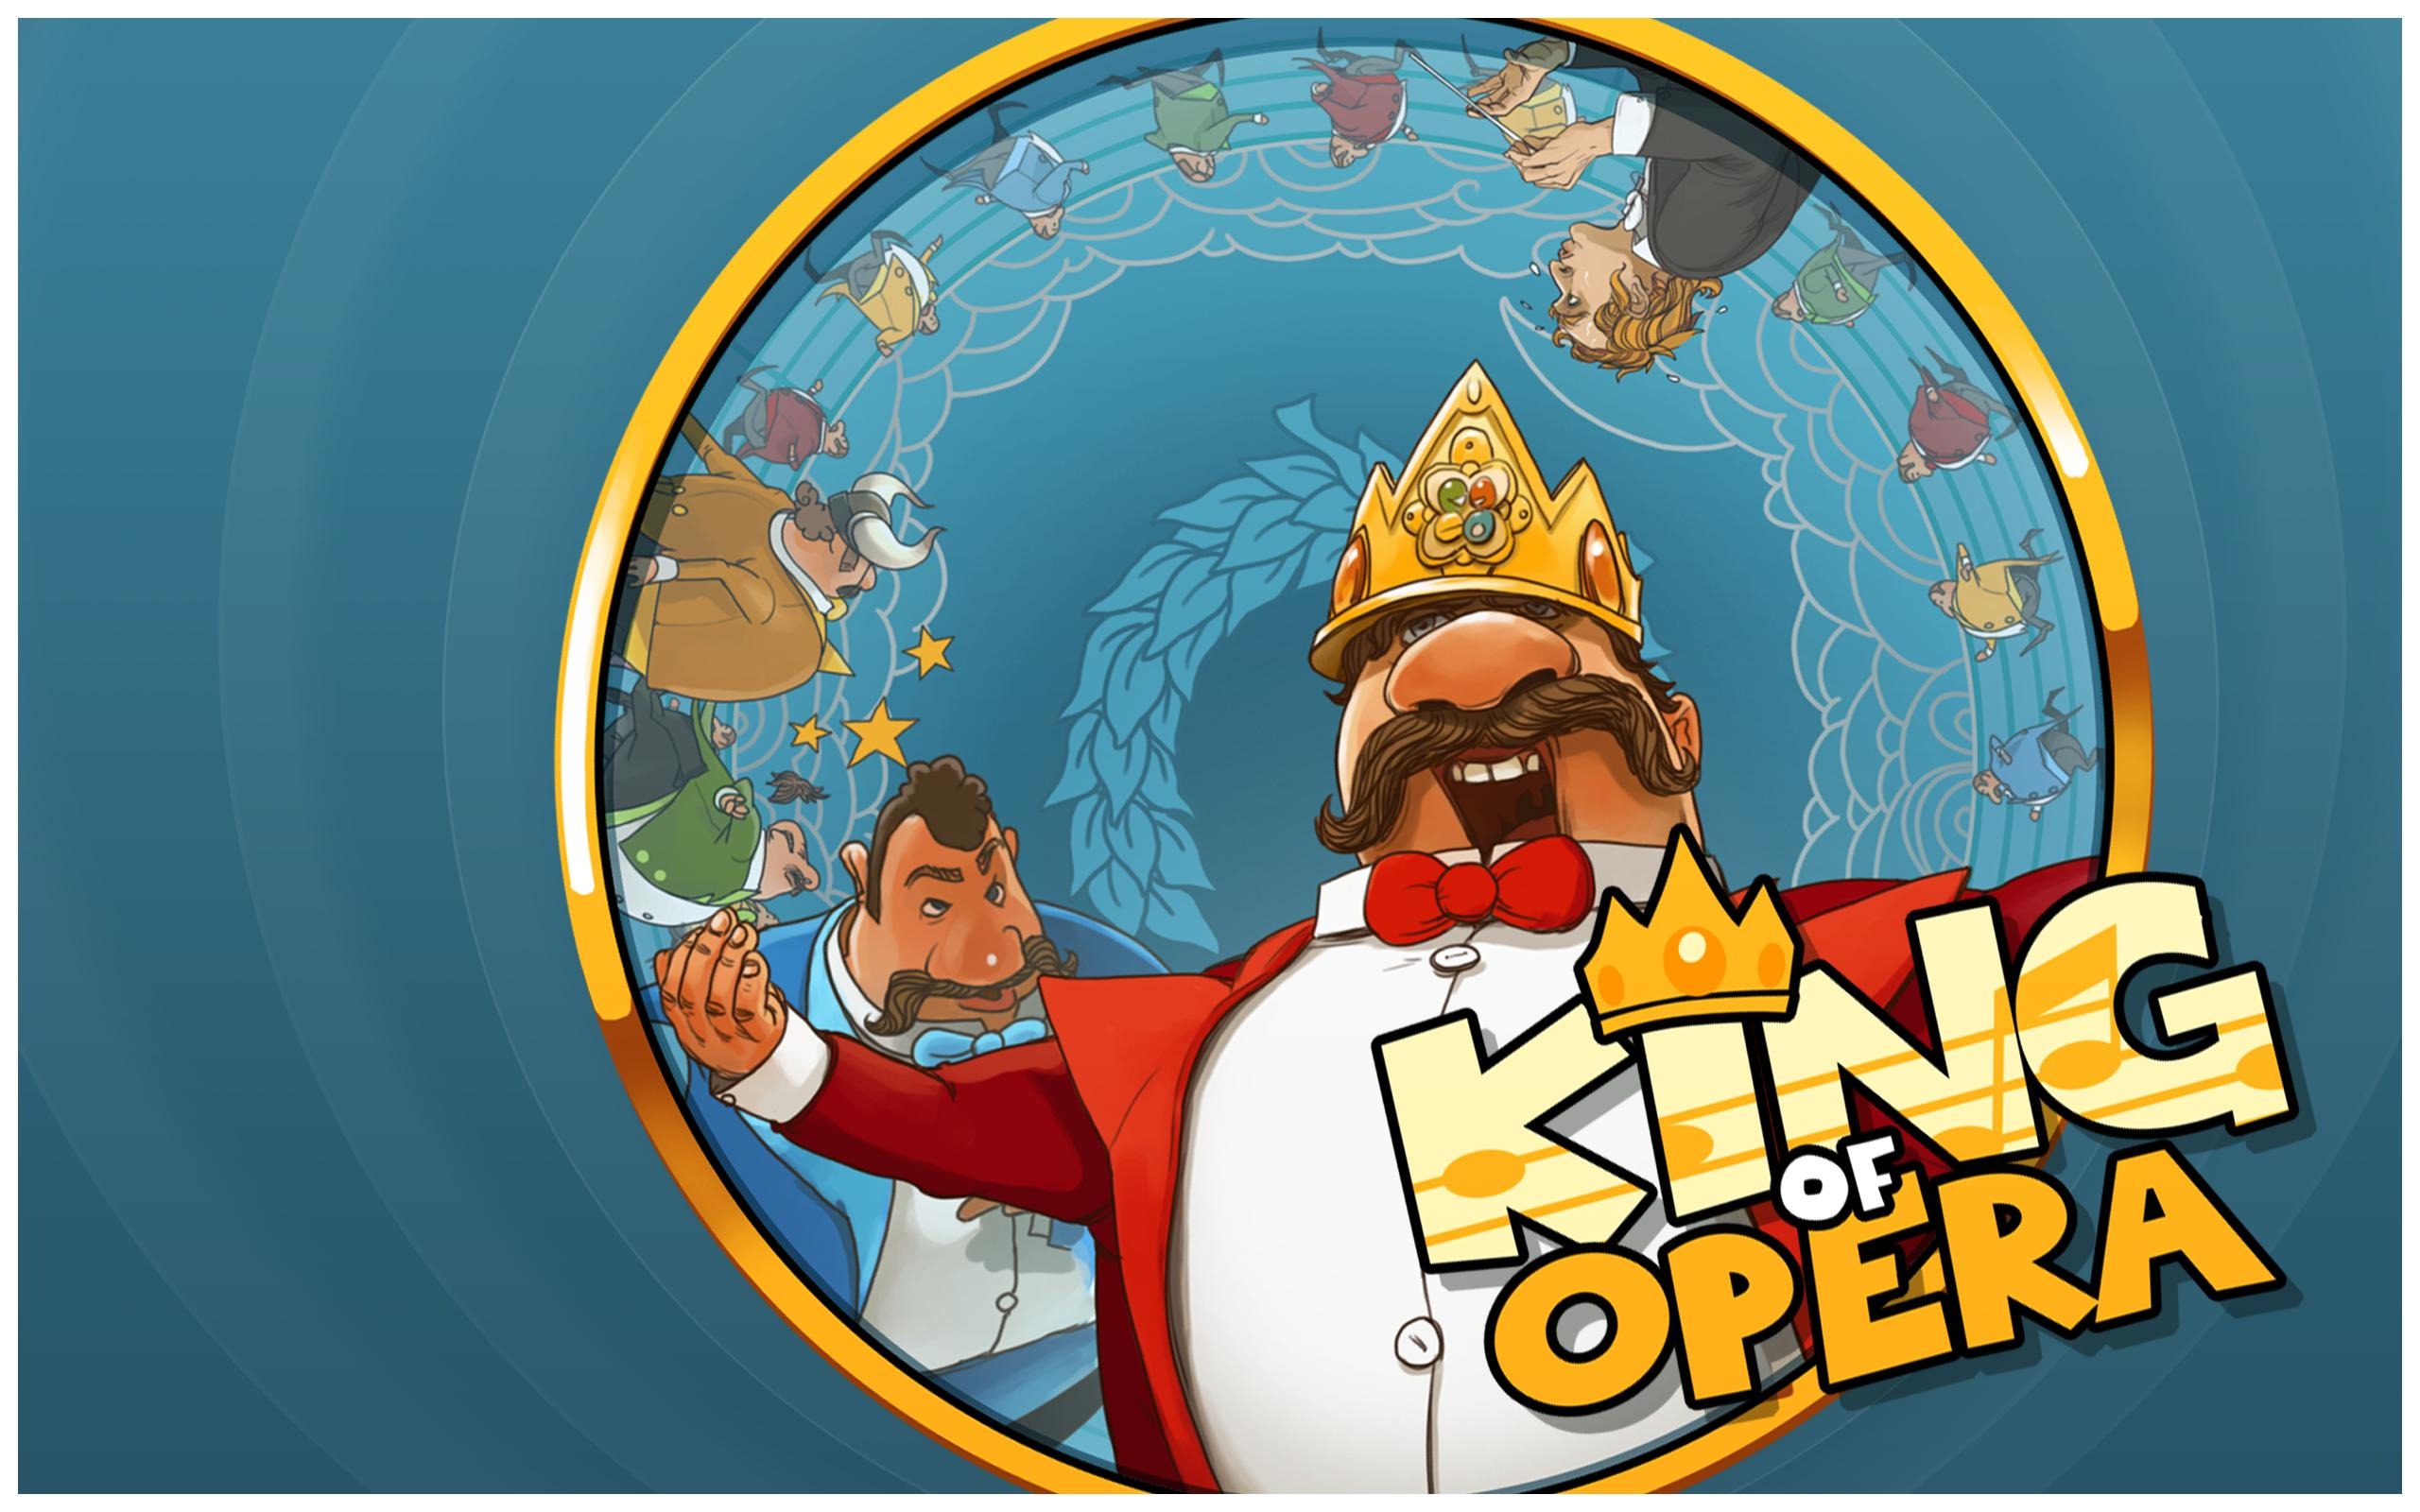 Imagem promocional de King of Opera